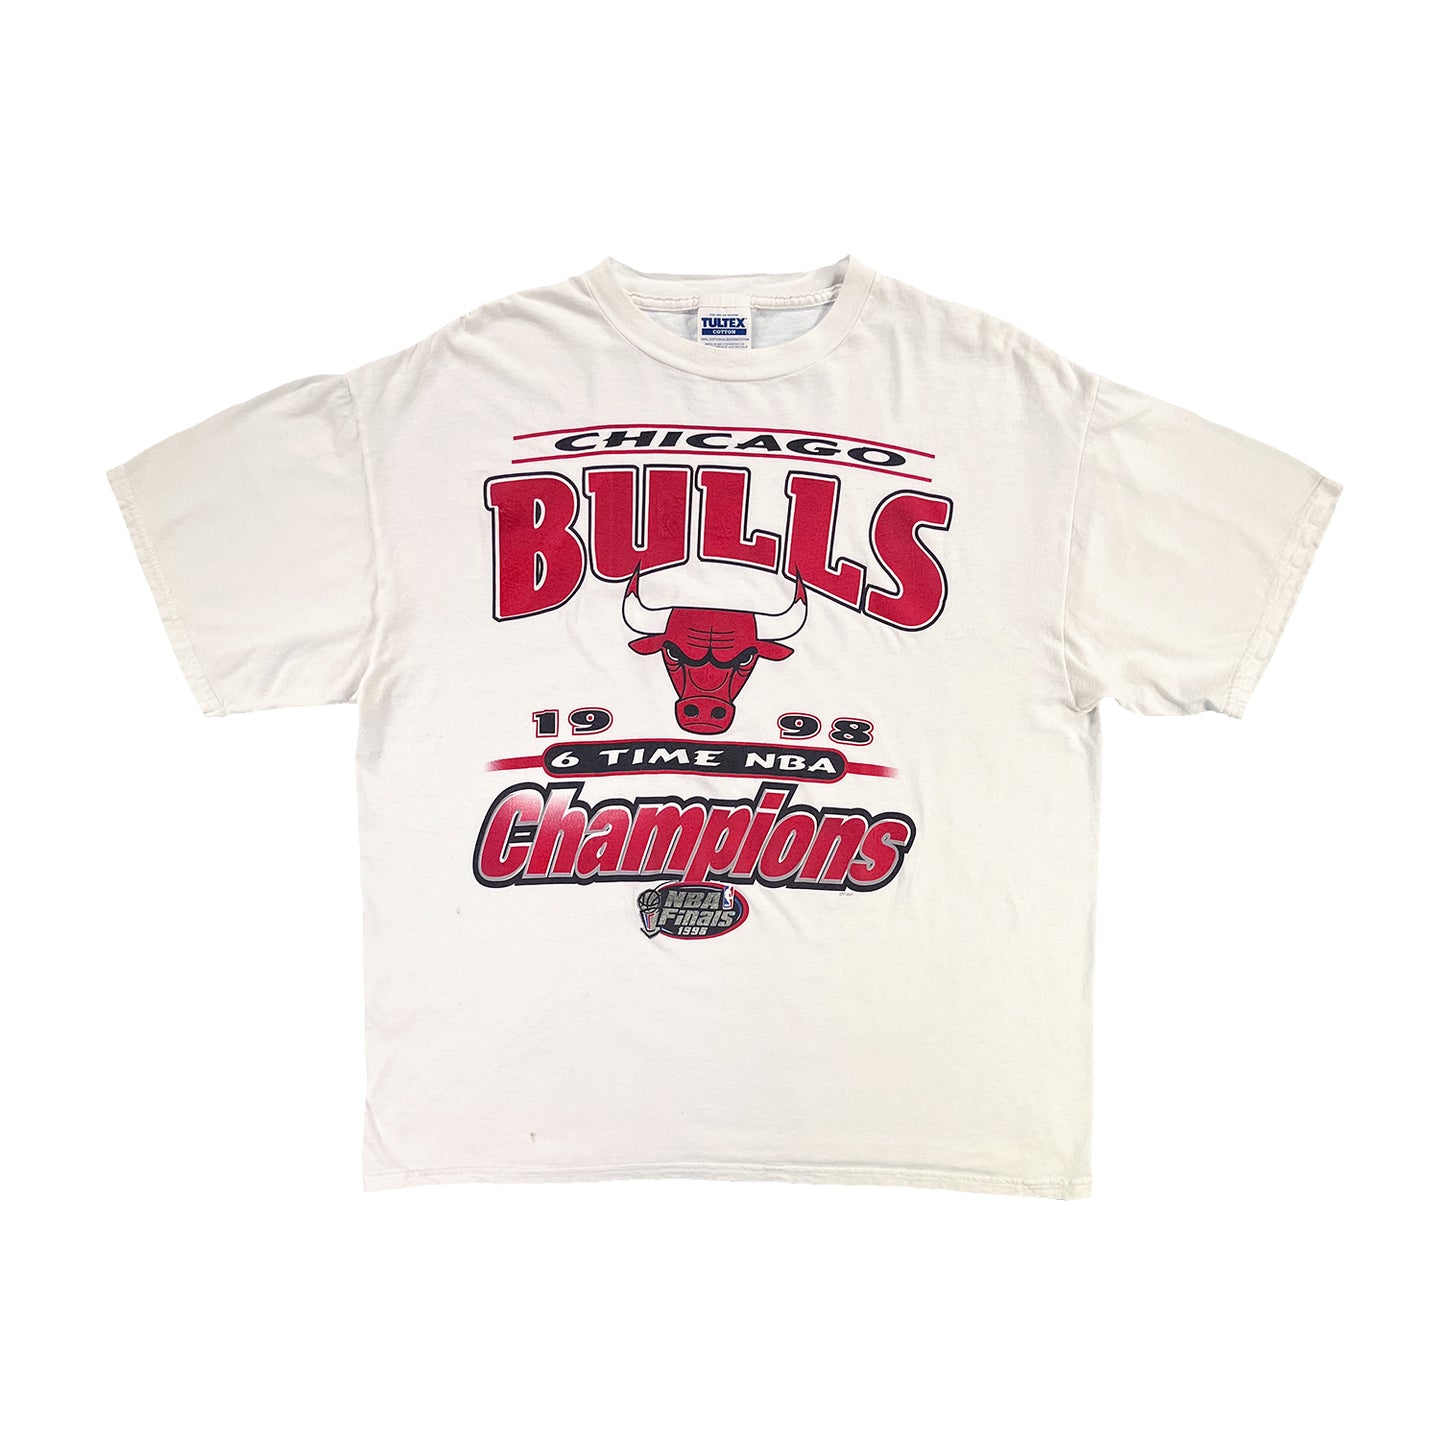 1998 Chicago Bulls 6-Time NBA Champions tee XL